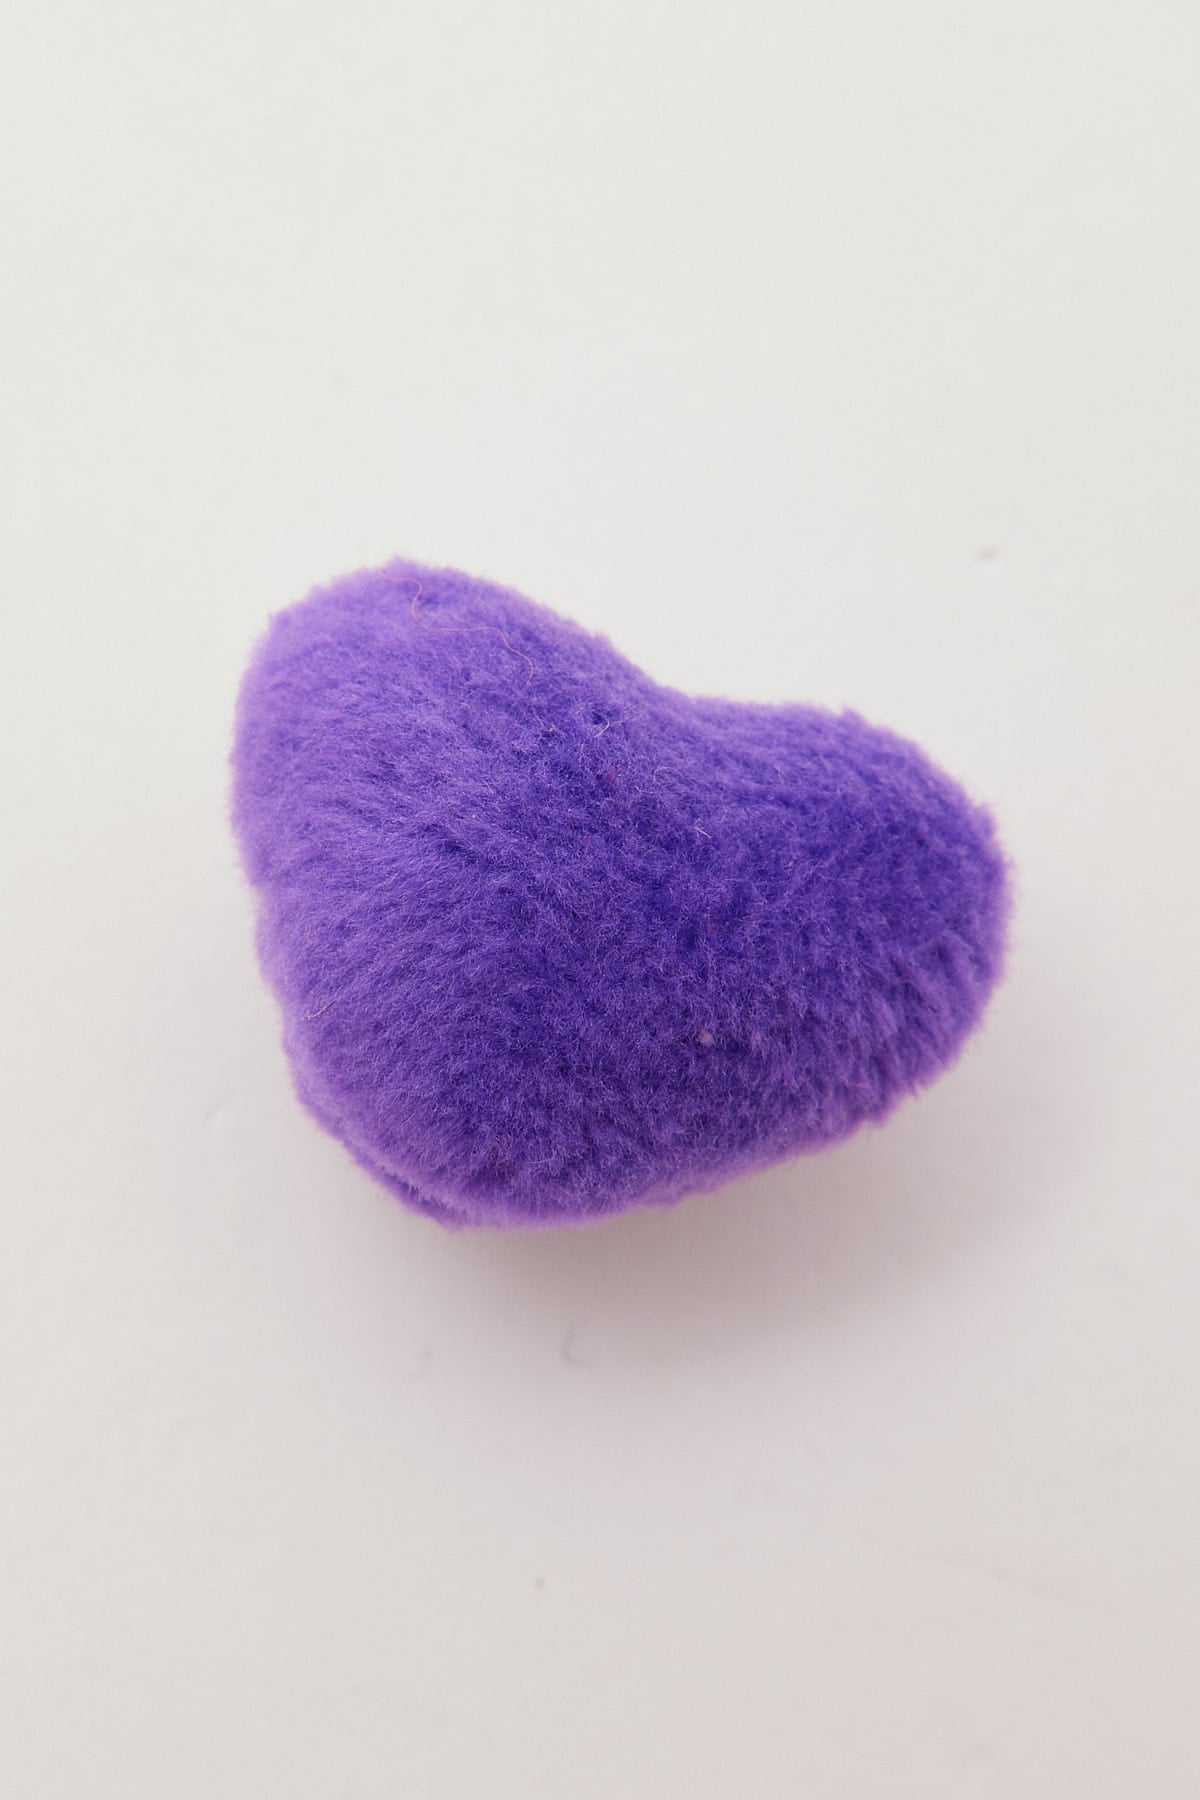 Crocs Fuzzy Heart Jibbitz Purple